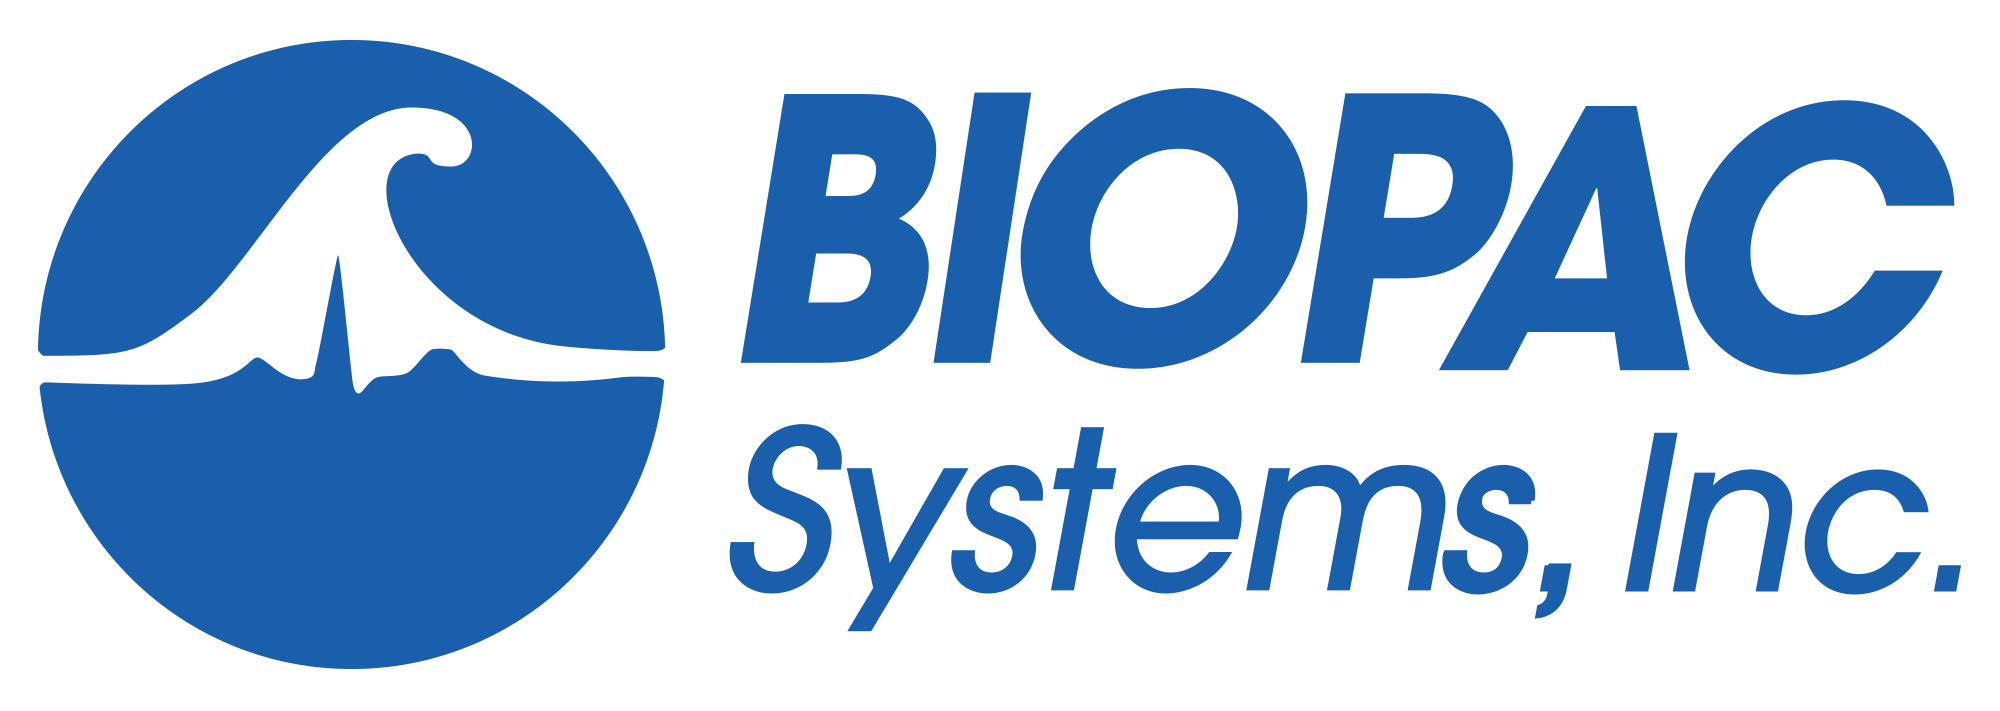 Biopac systems